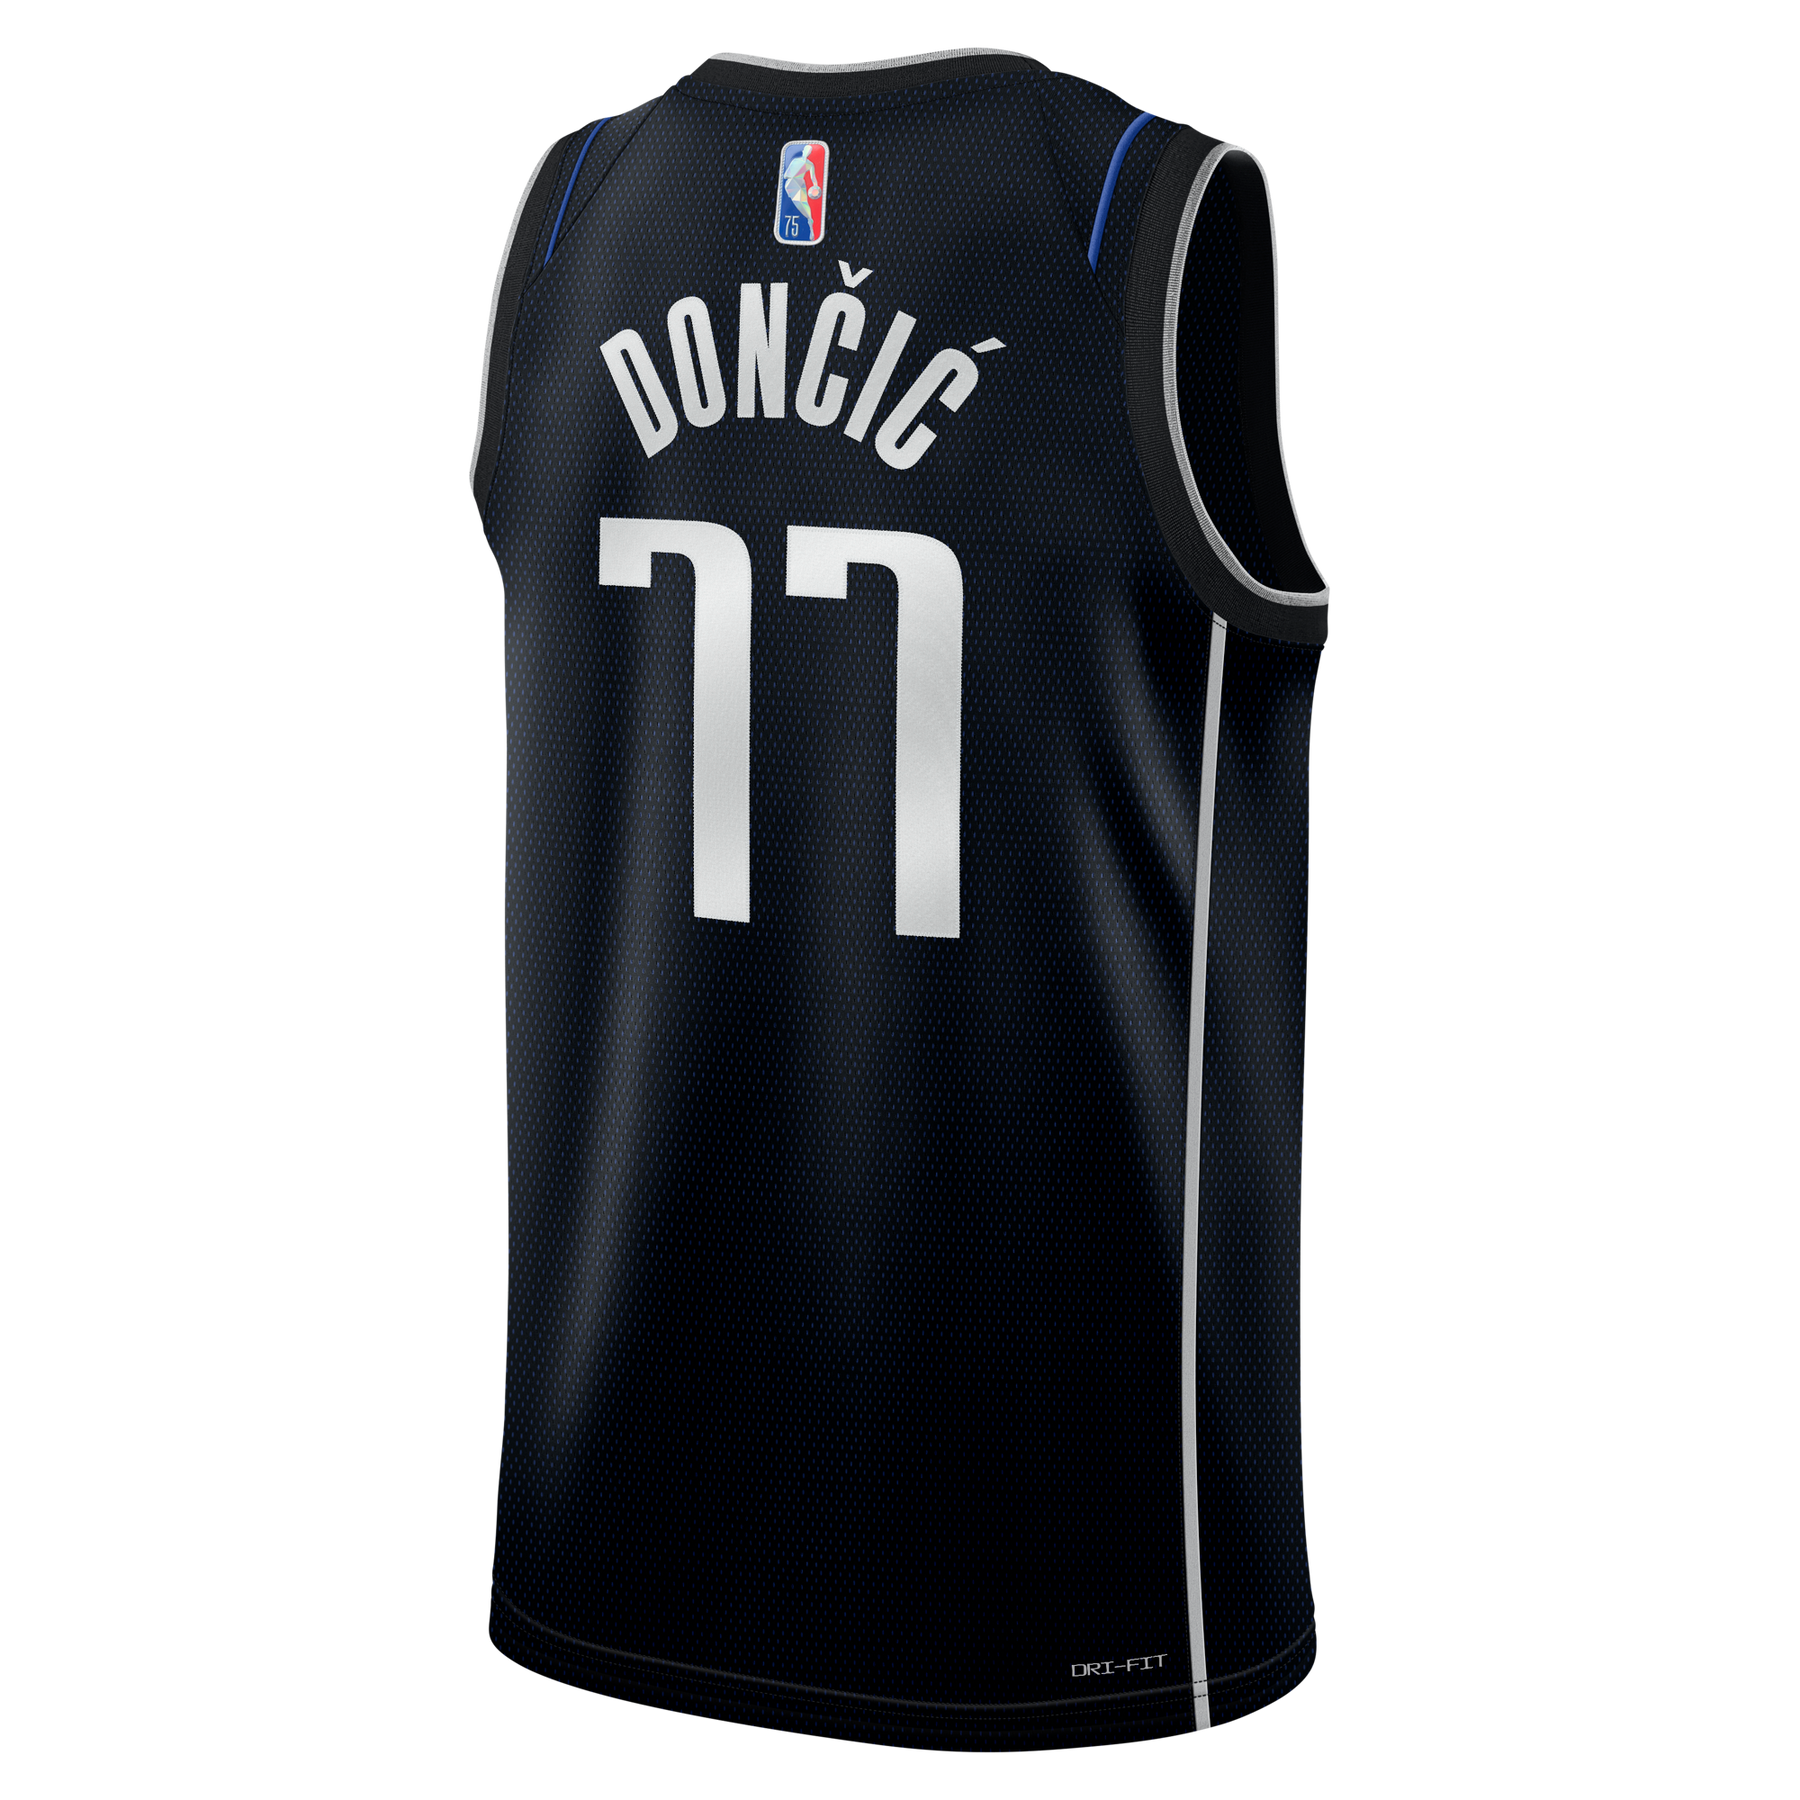 Black Dallas Mavericks NBA Jerseys for sale